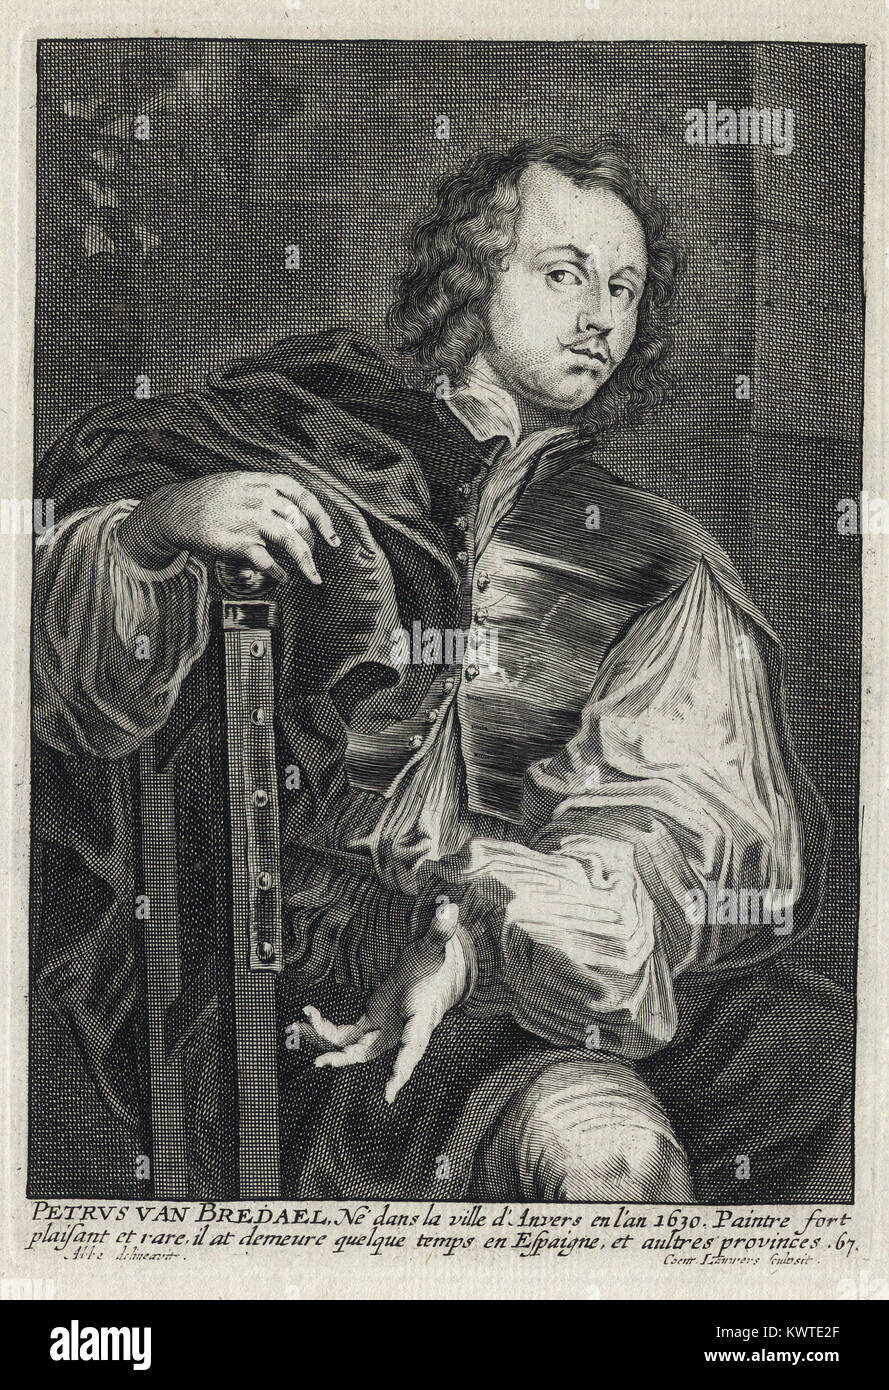 PETRUS VAN BREDAEL - Woodcut portrait and short biography (old french language) - Engraving 17th century Stock Photo